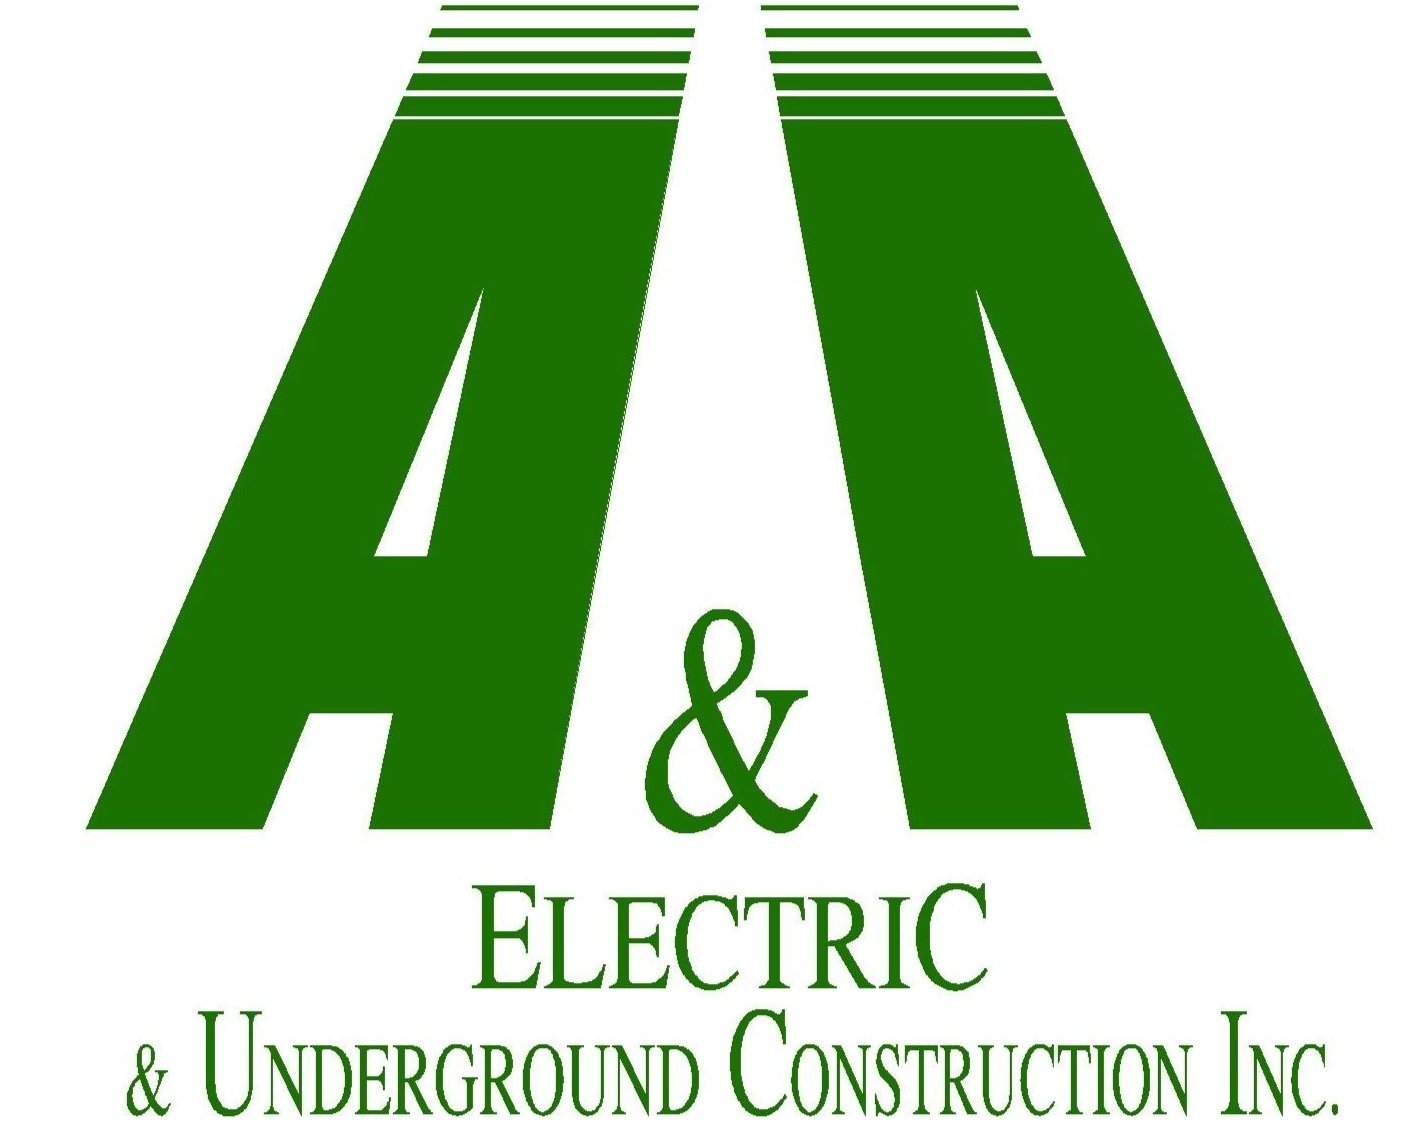 A&amp;A Electric &amp; Underground, Inc.